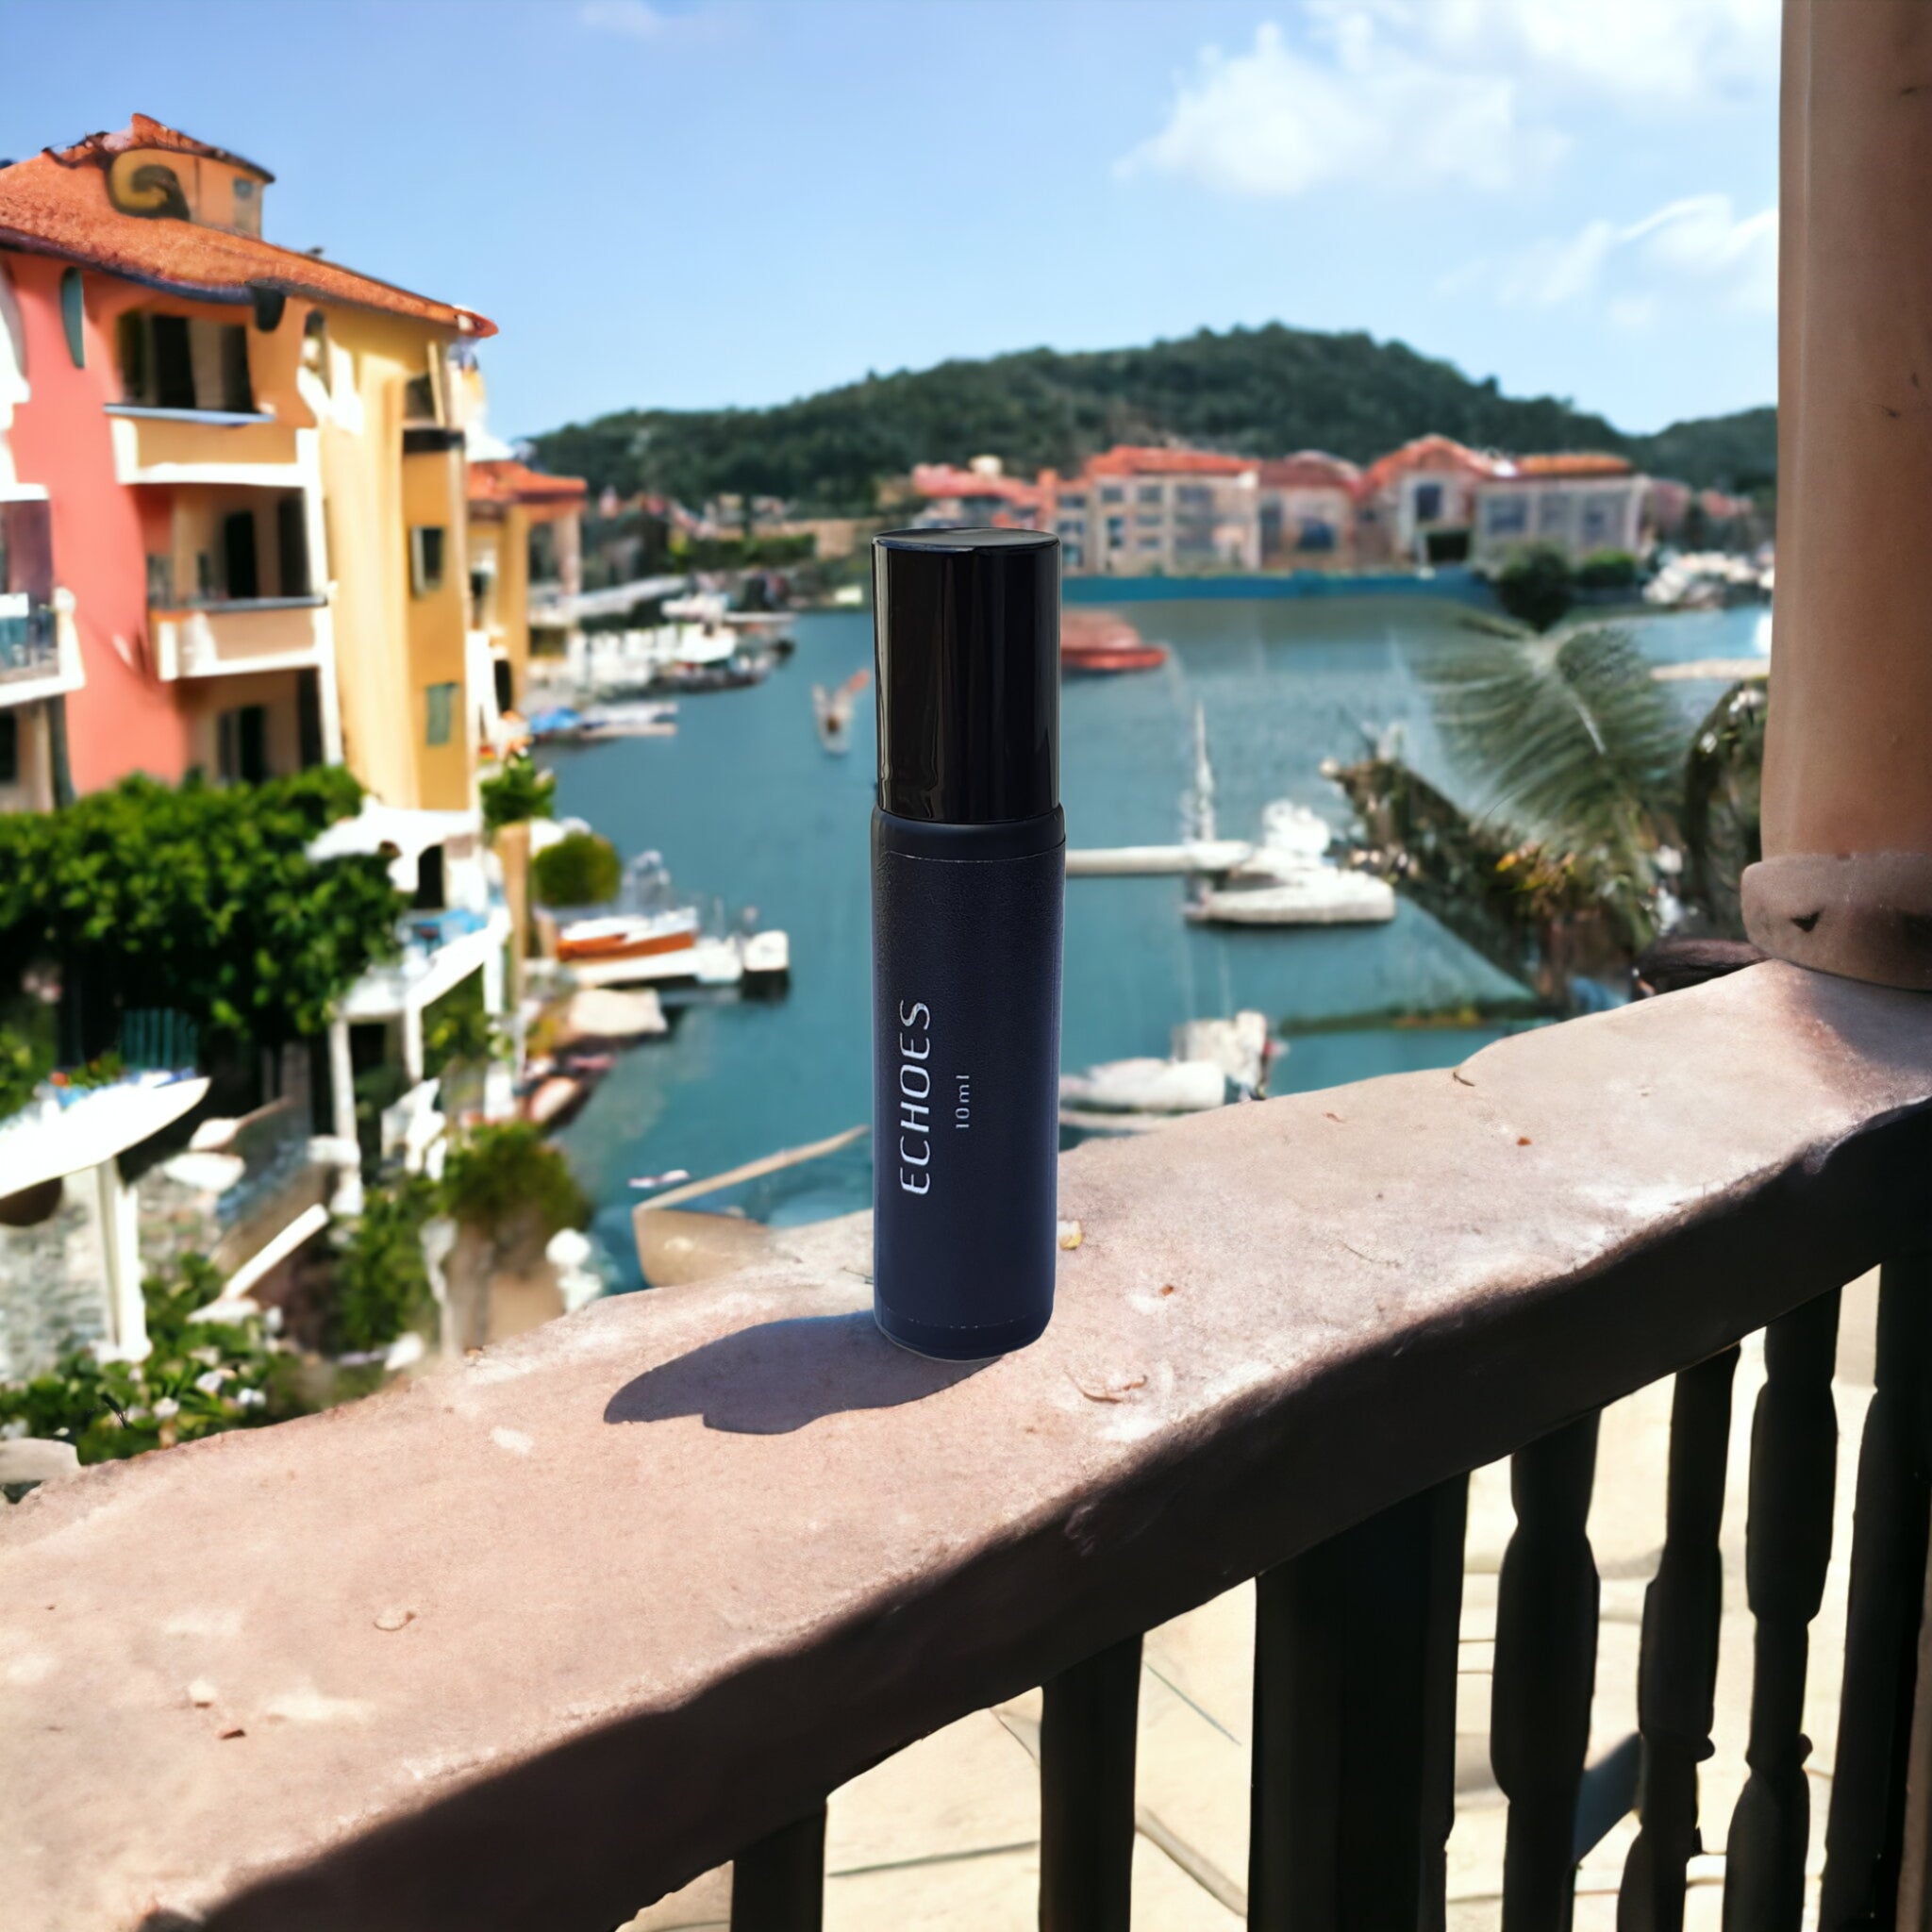 Bottle of Echoes of Neroli Portofino overlooking a harbour